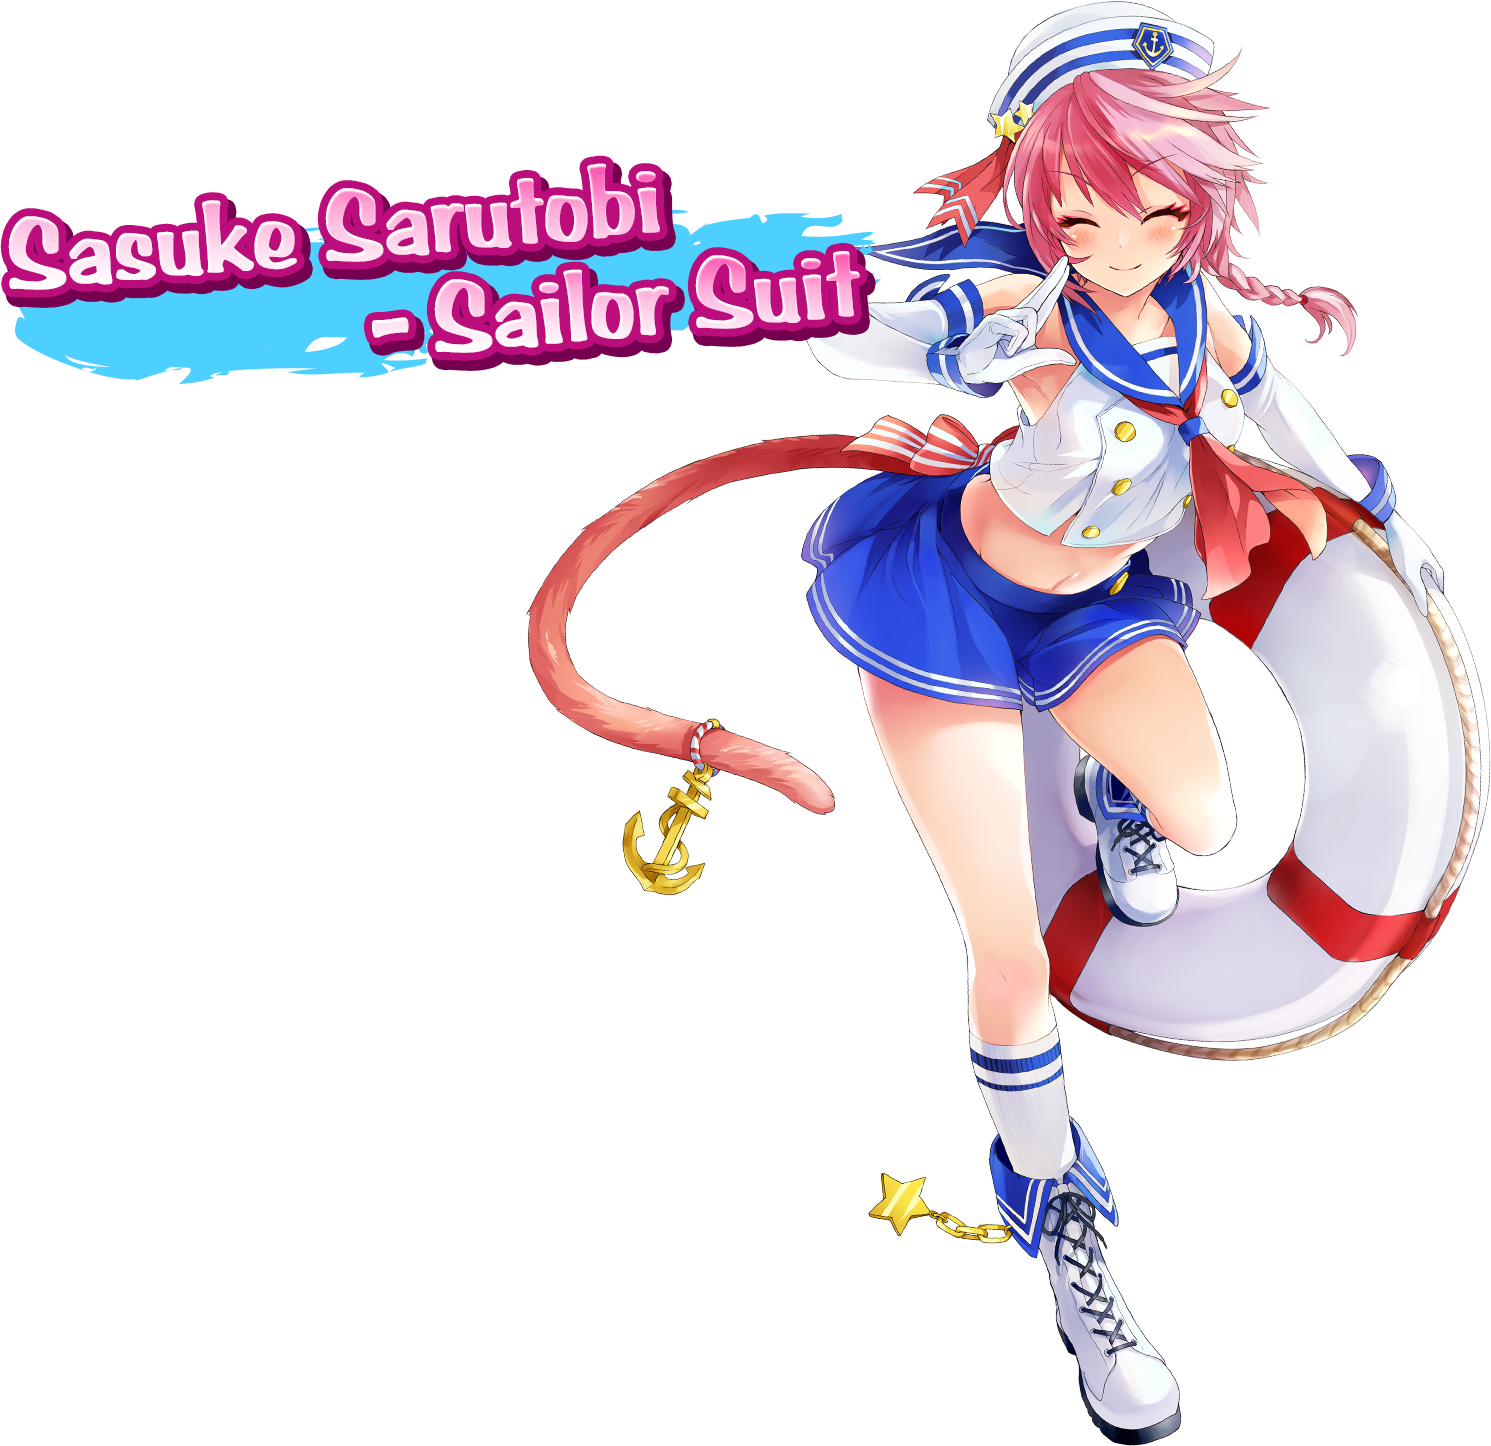 Sasuke Sarutobi - Sailor Suit